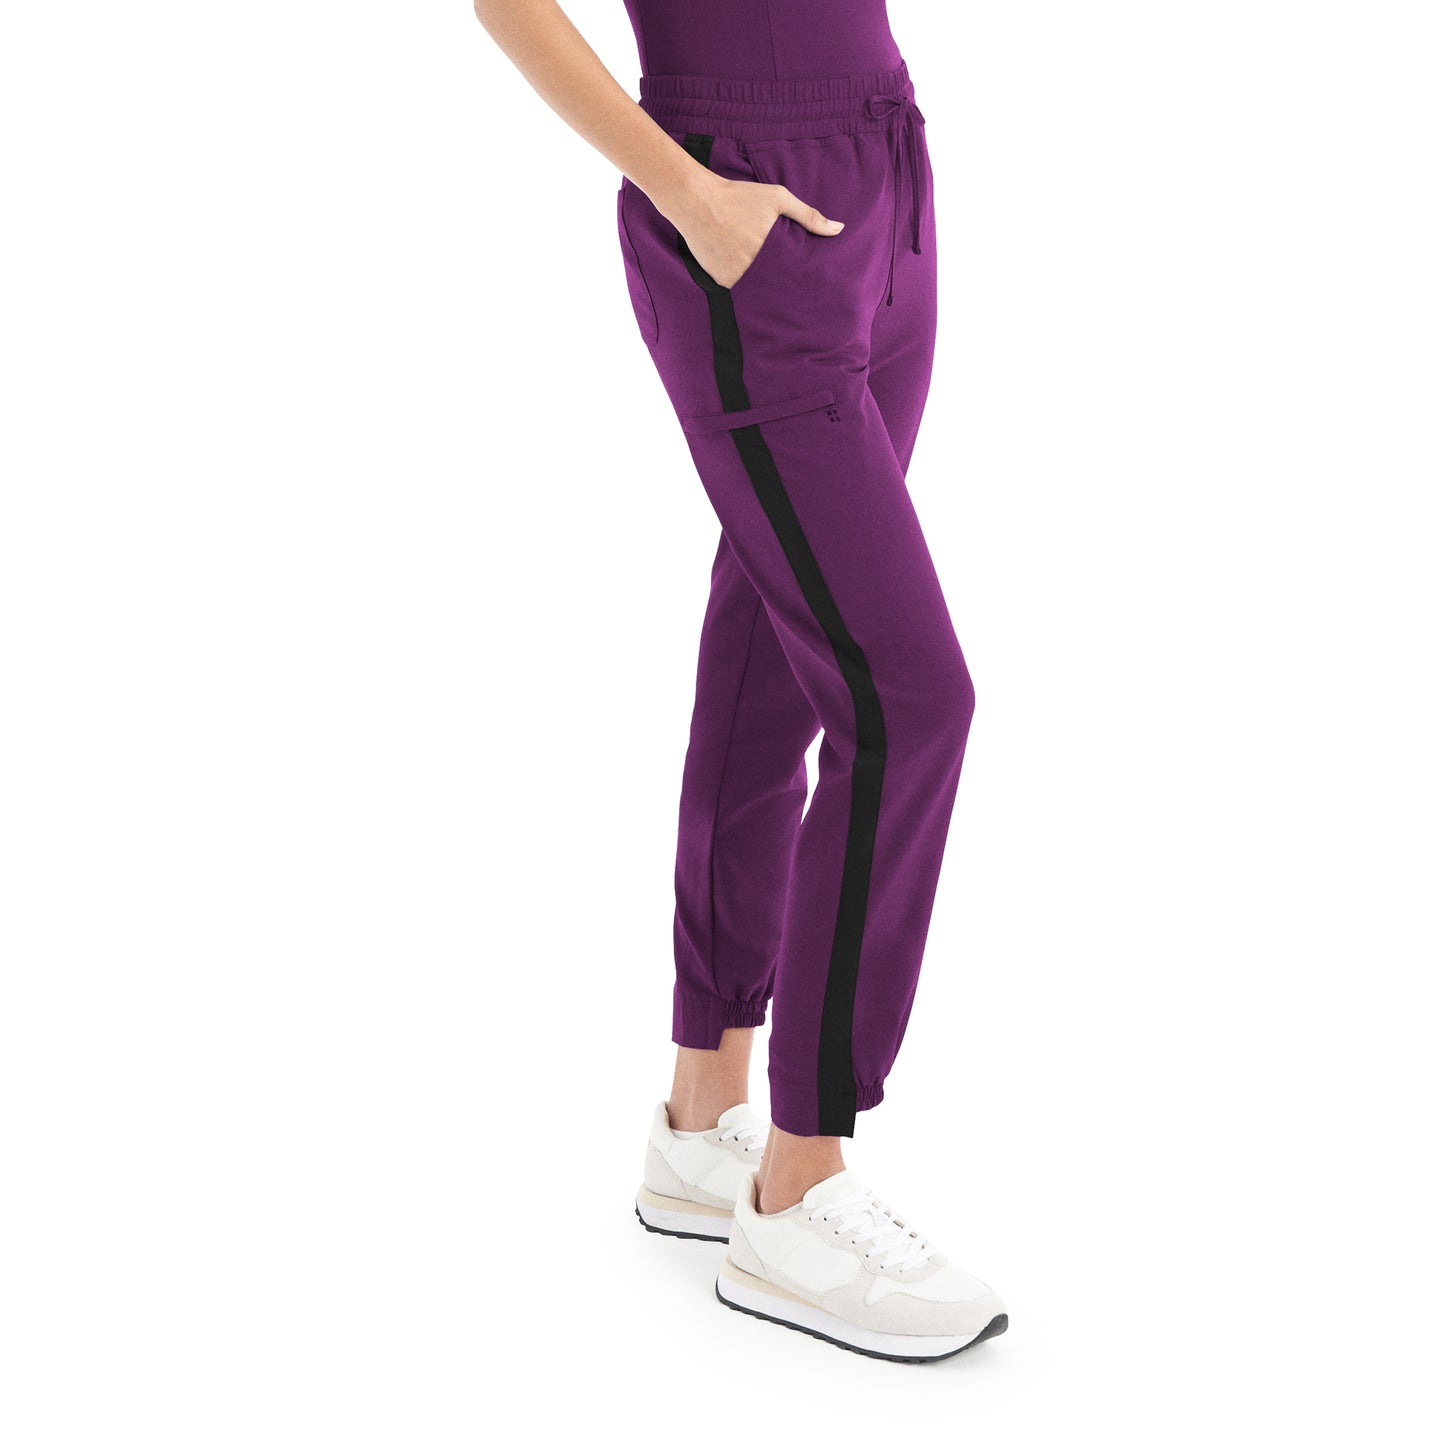 White Cross CRFT WB415 - Women's jogger scrubs pants